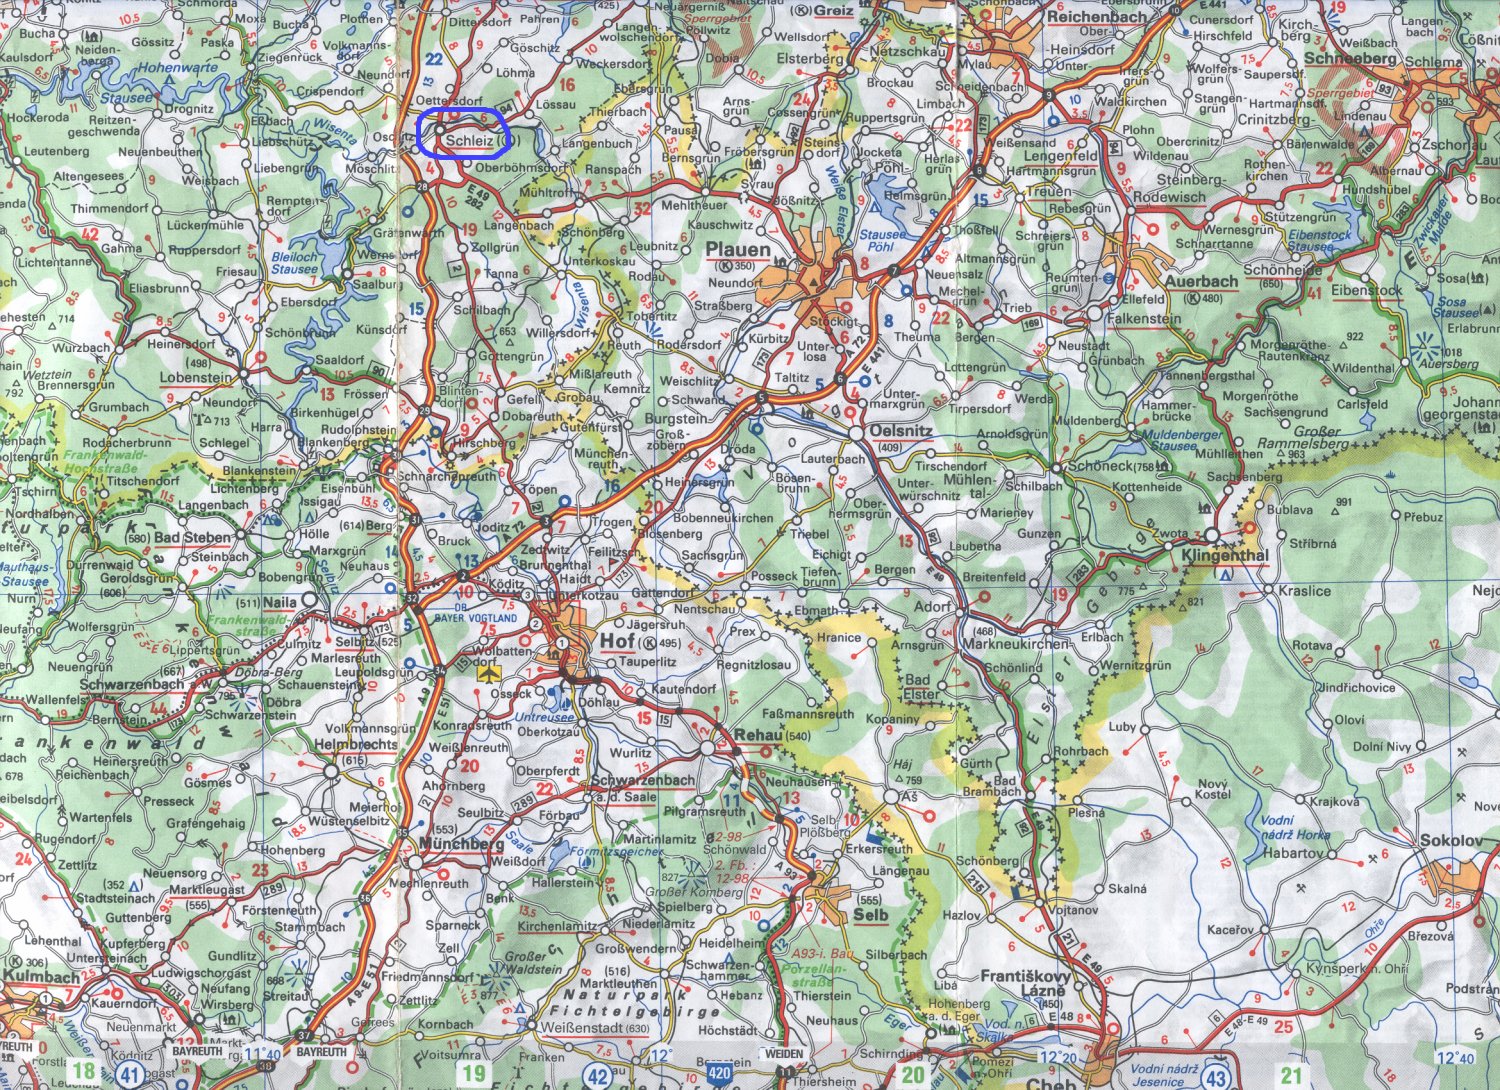 Guide to Bach Tour: Schleiz - Maps